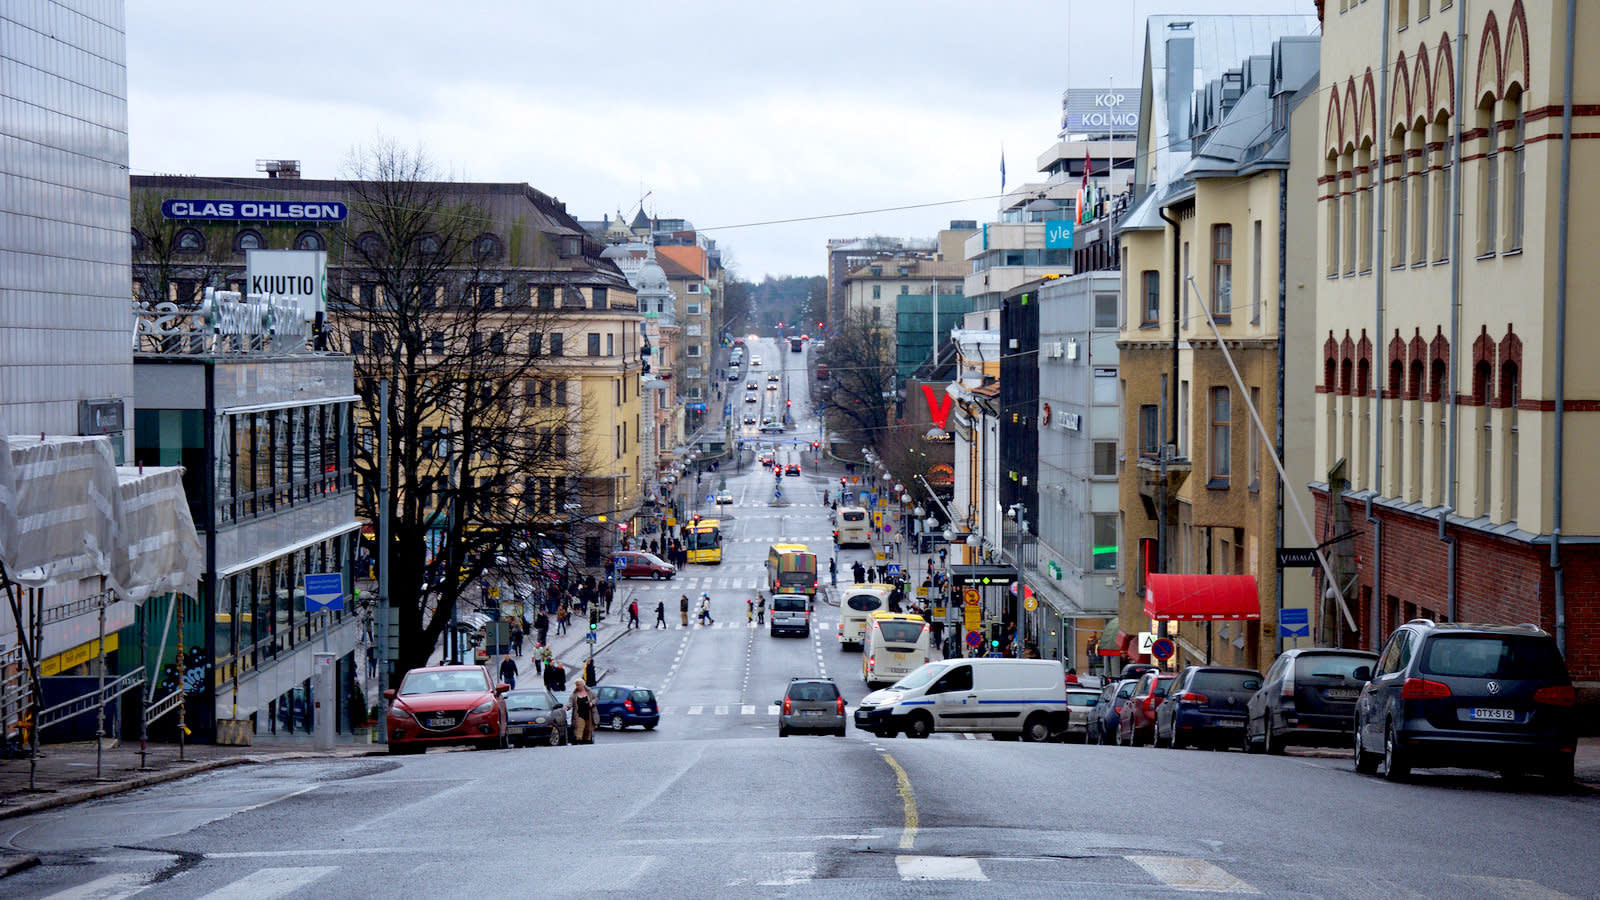 In Turku, five young men die from suspected poisonings